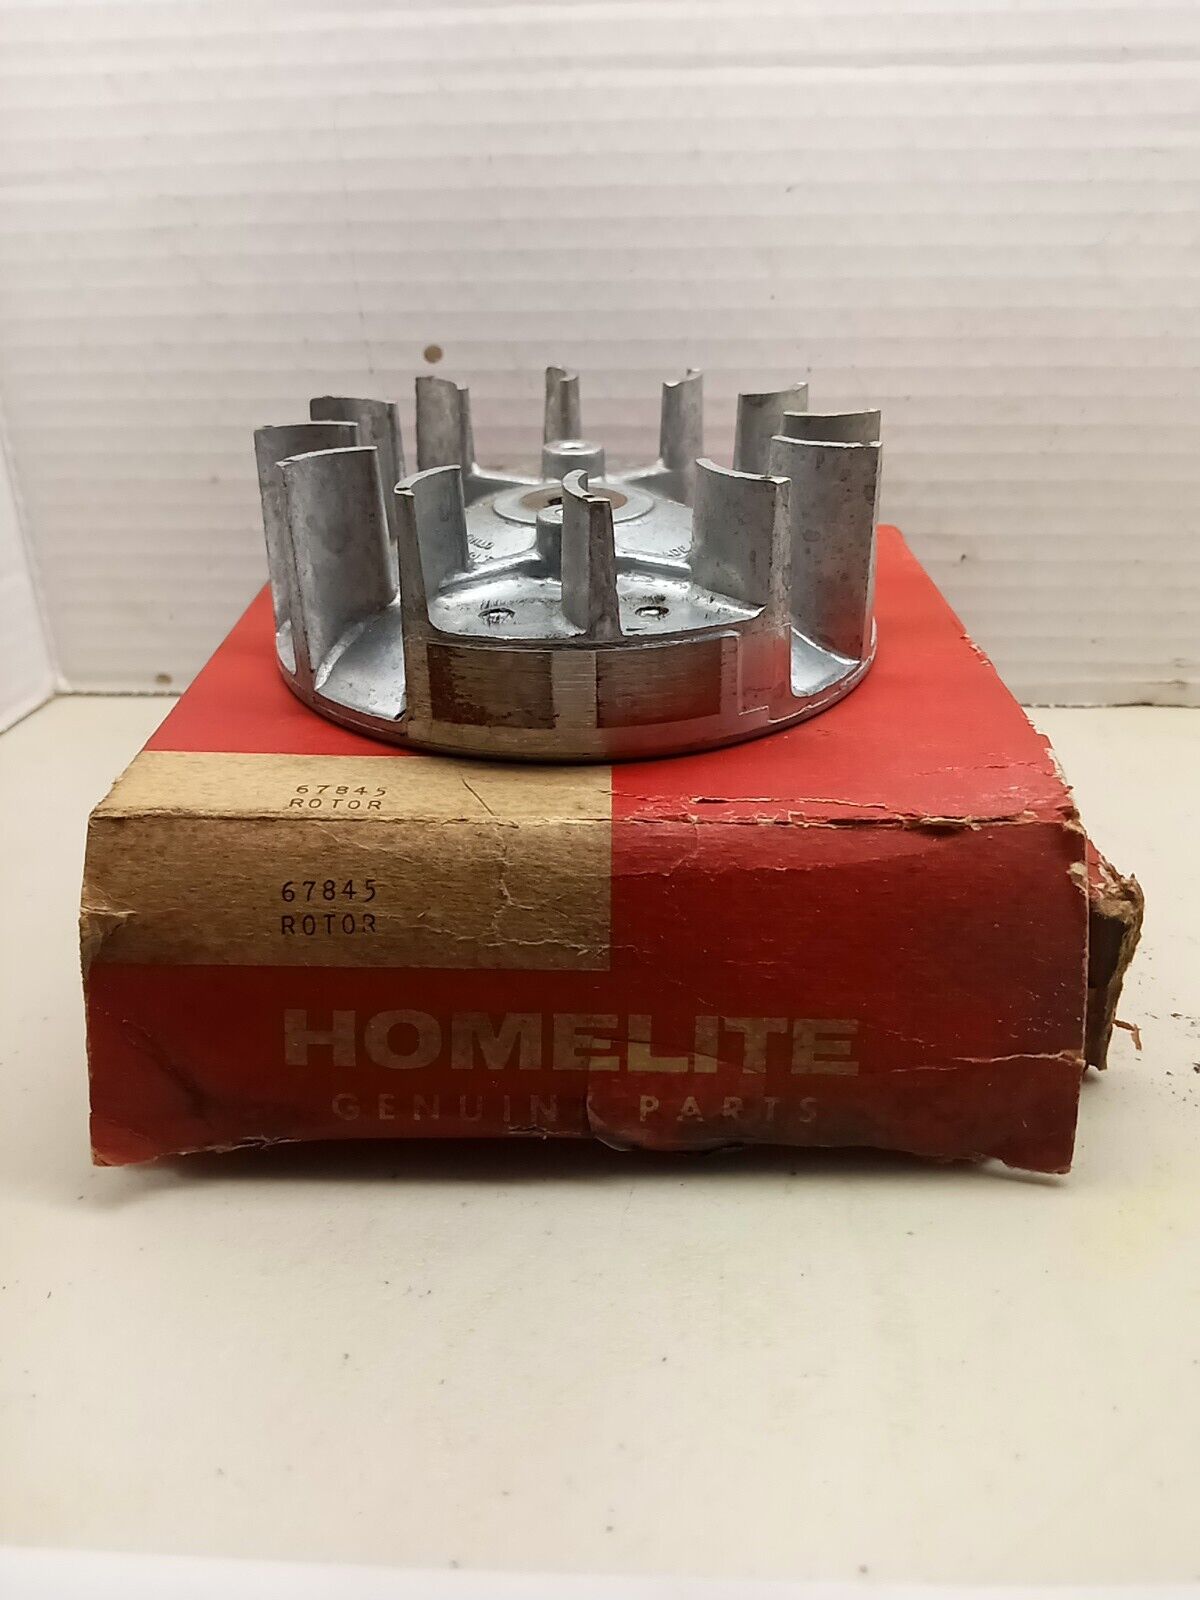  Homelite Flywheel #67845 Rotor NOS Chainsaw Part Homelite XL 400 Auto.   Hmlt-1